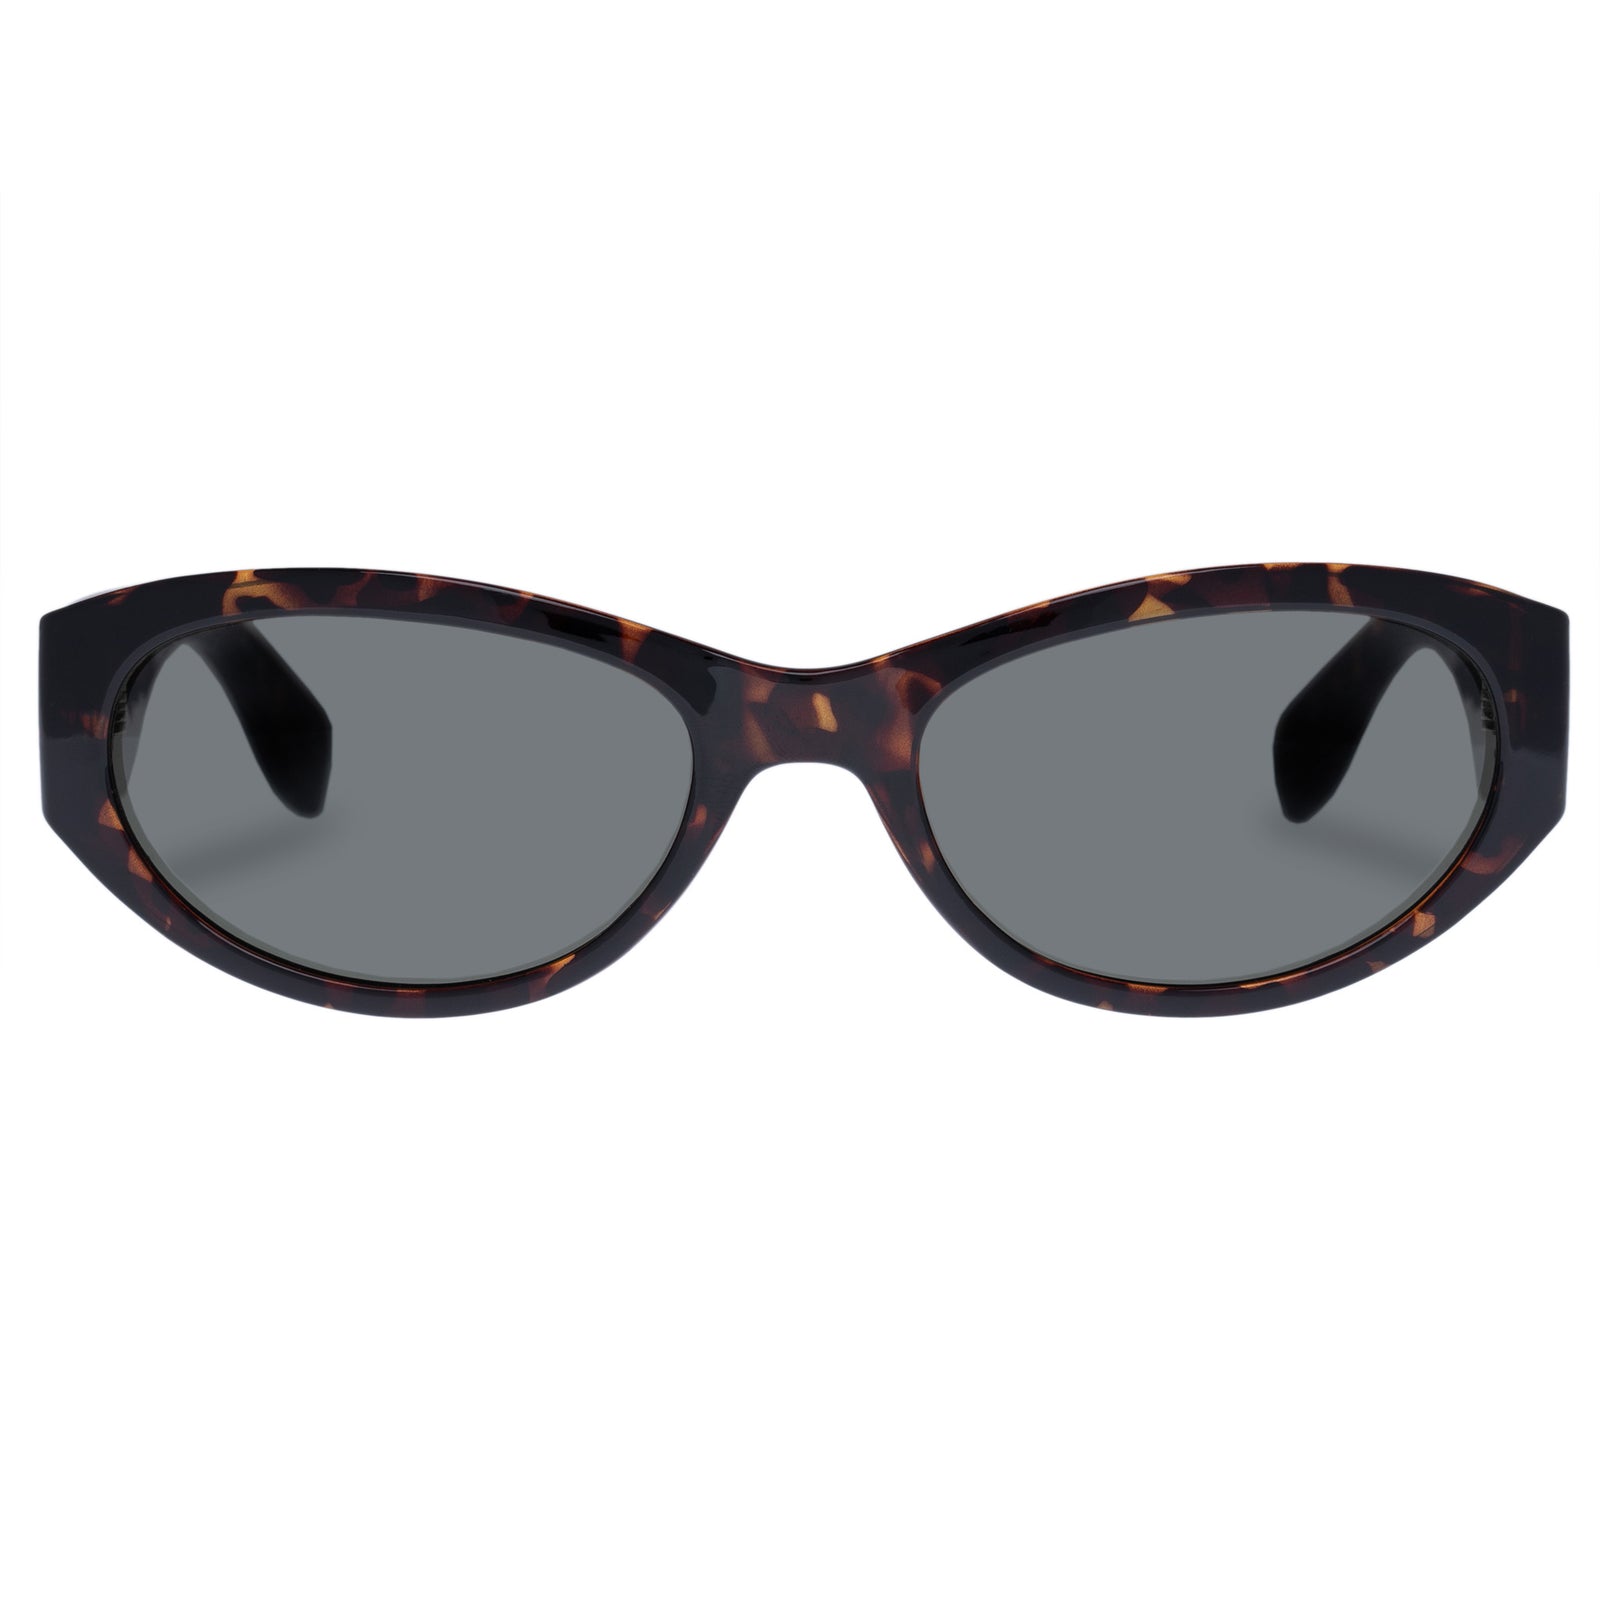 Olivia | Large Round Sunglasses | Made in USA Tokyo Tortoise / 55-22-140